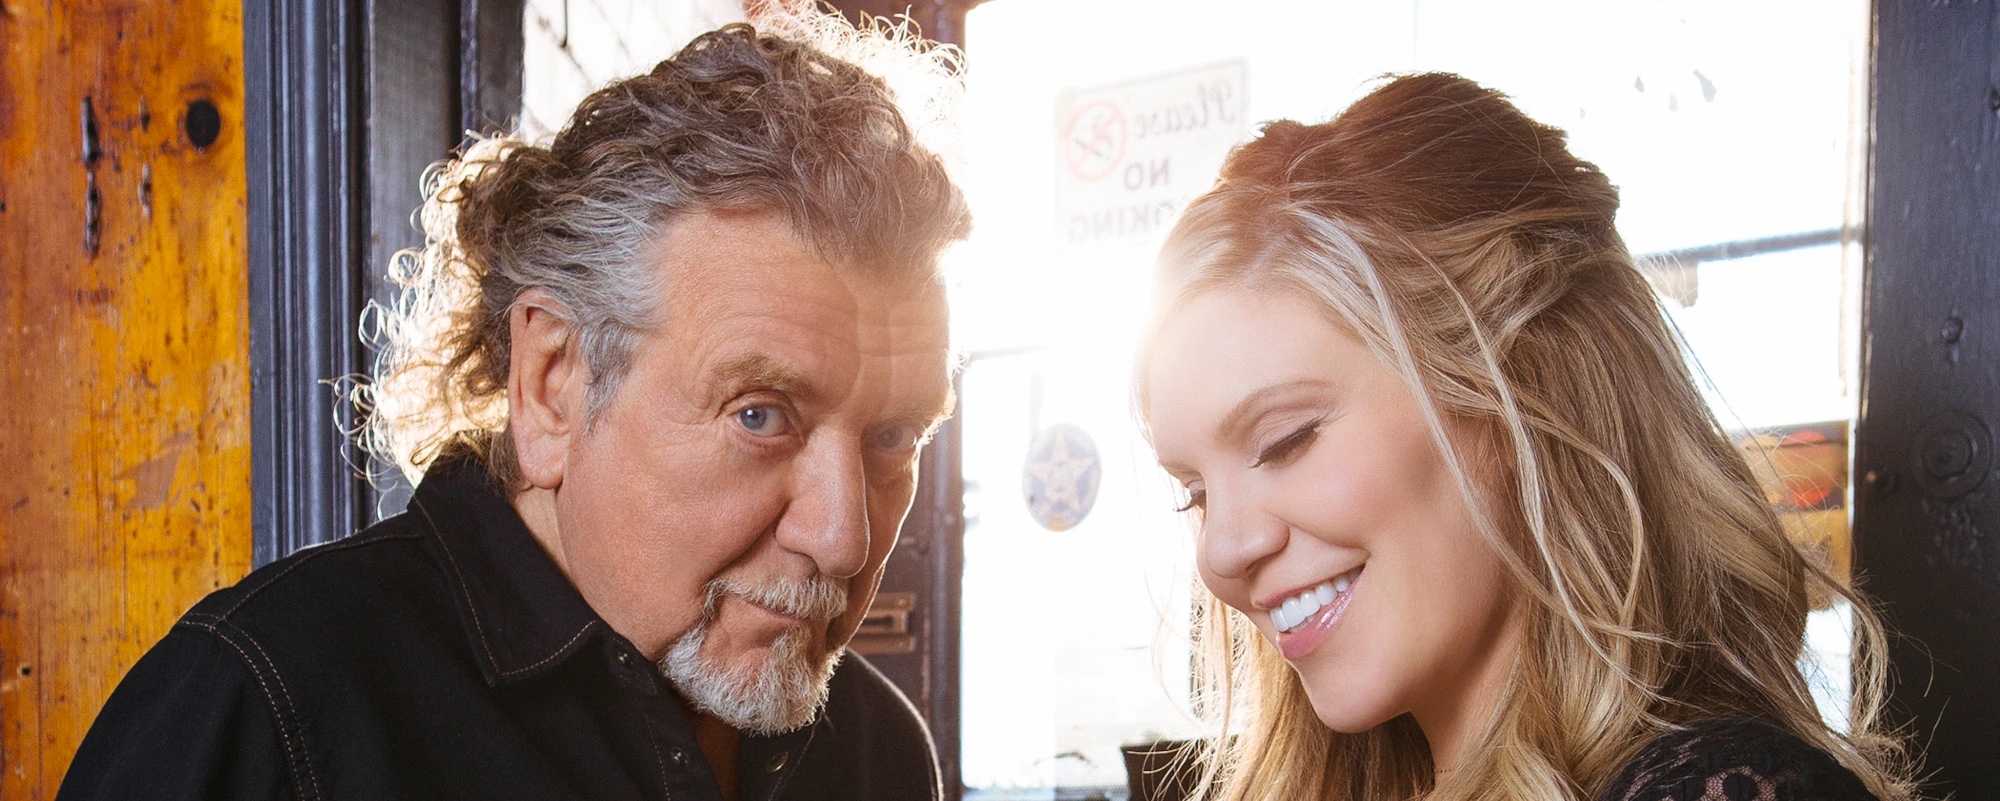 Robert Plant and Alison Krauss Talk New Album, Country Music